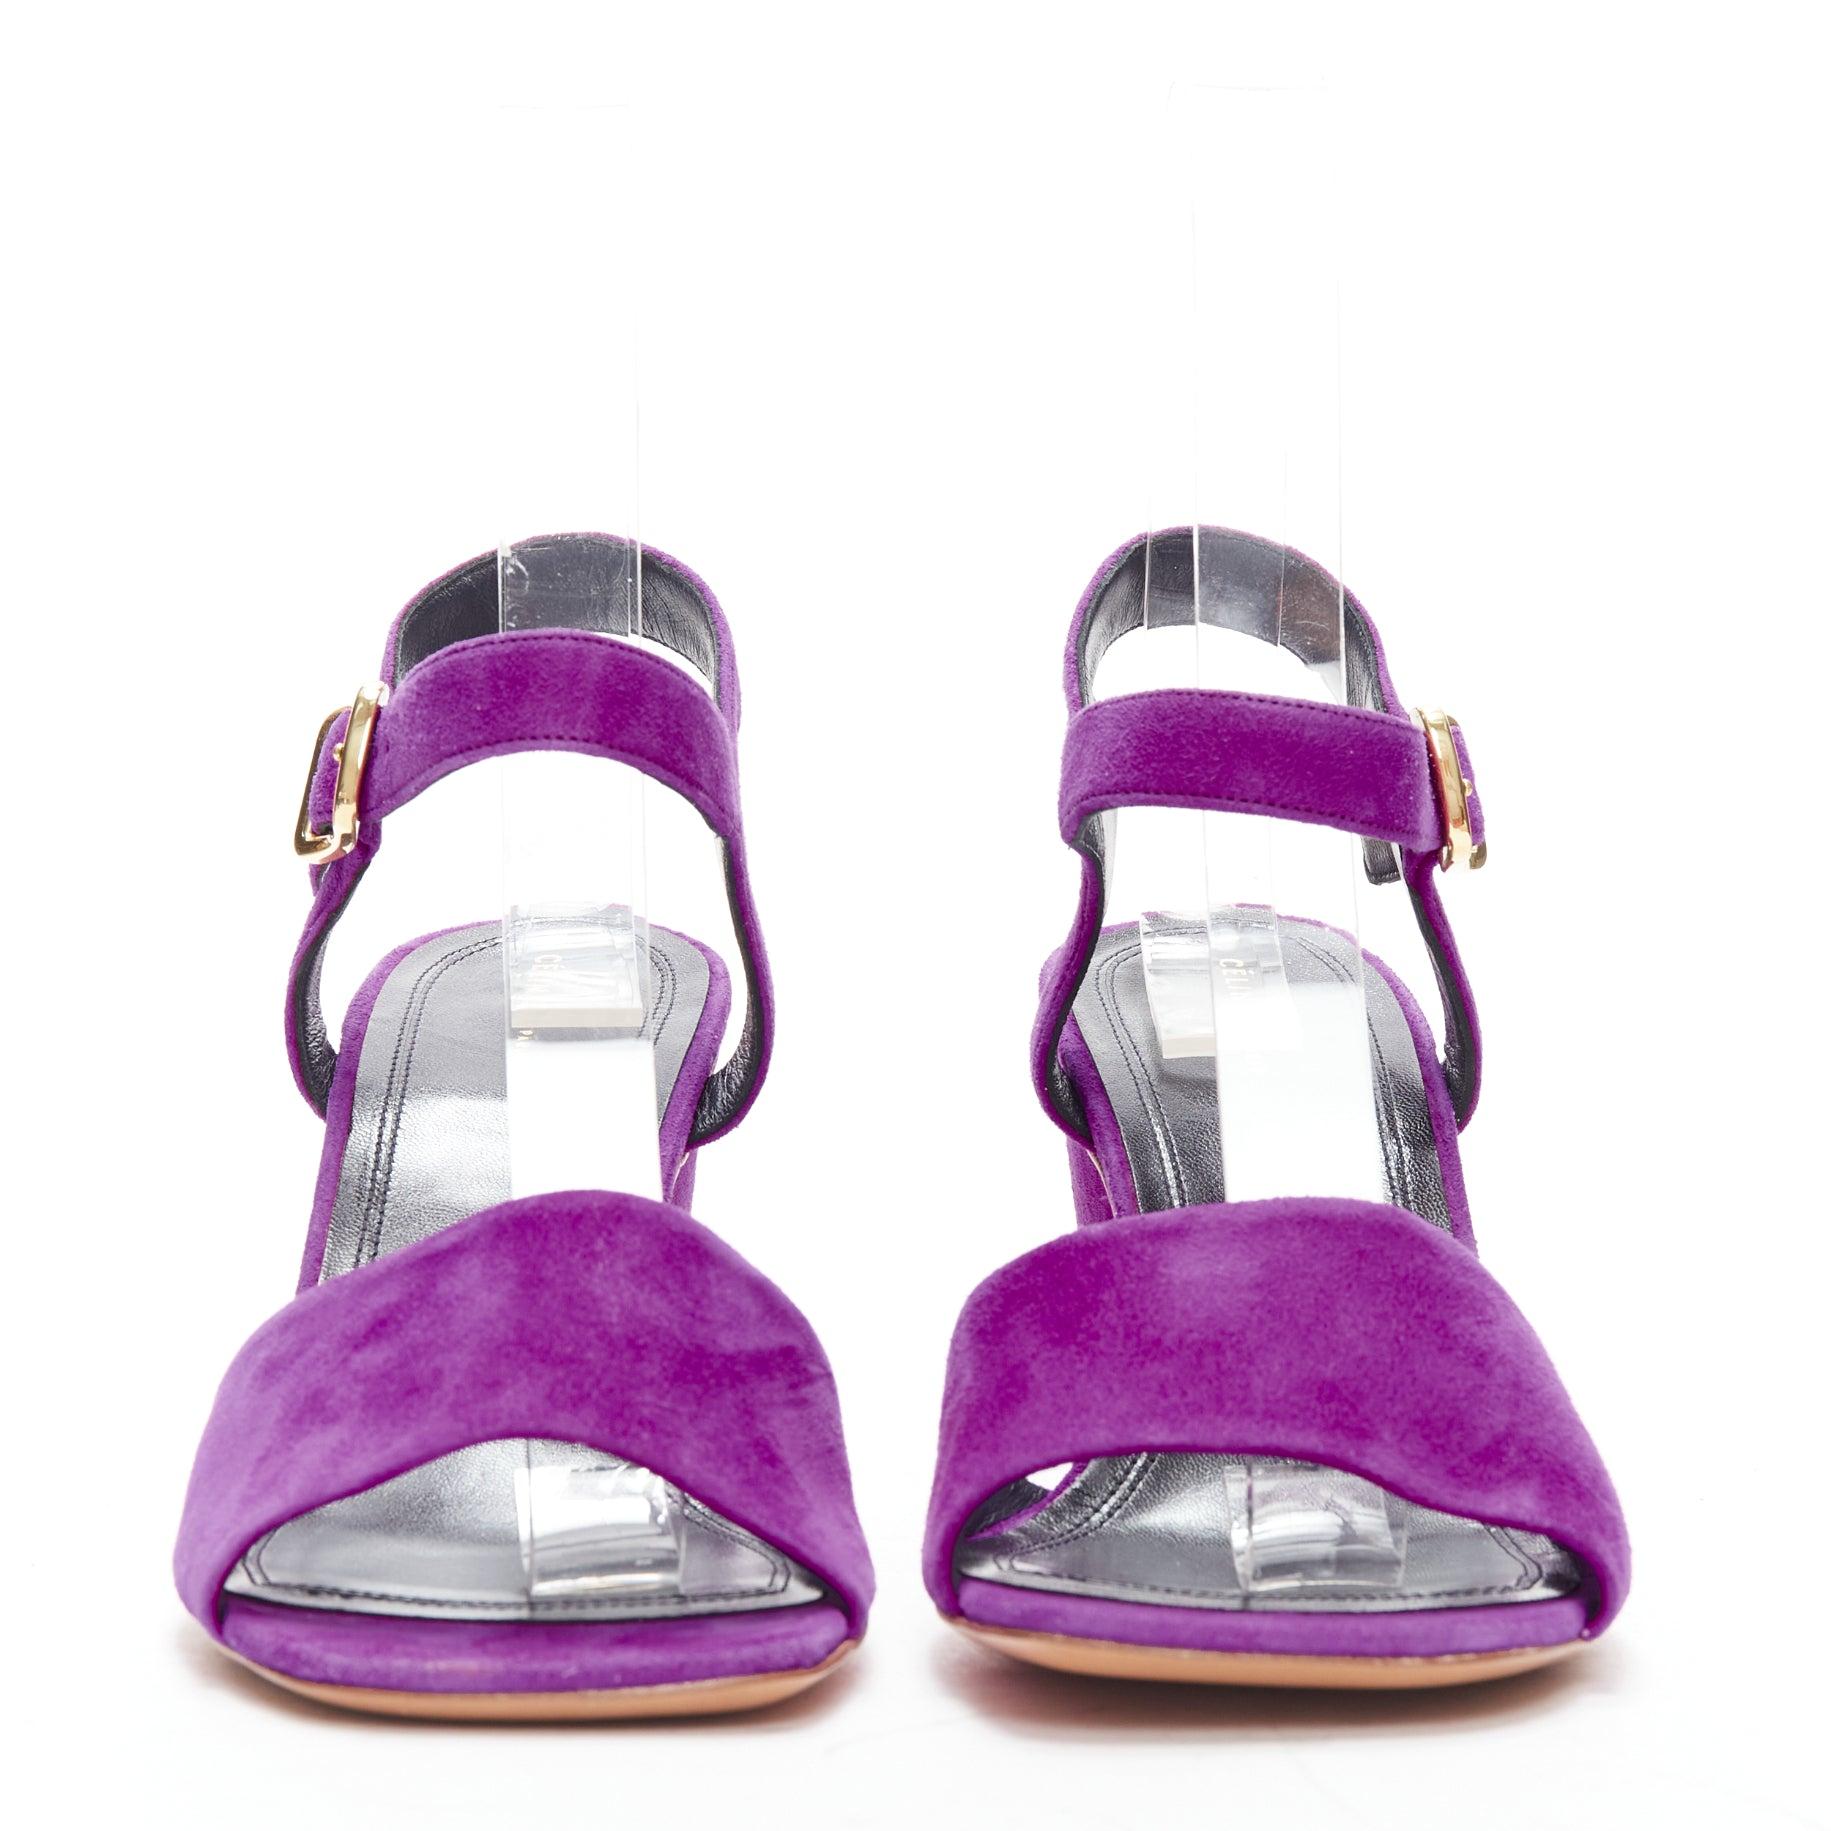 OLD CELINE Phoebe Philo purple suede gold buckle strappy sandal heels EU38 5